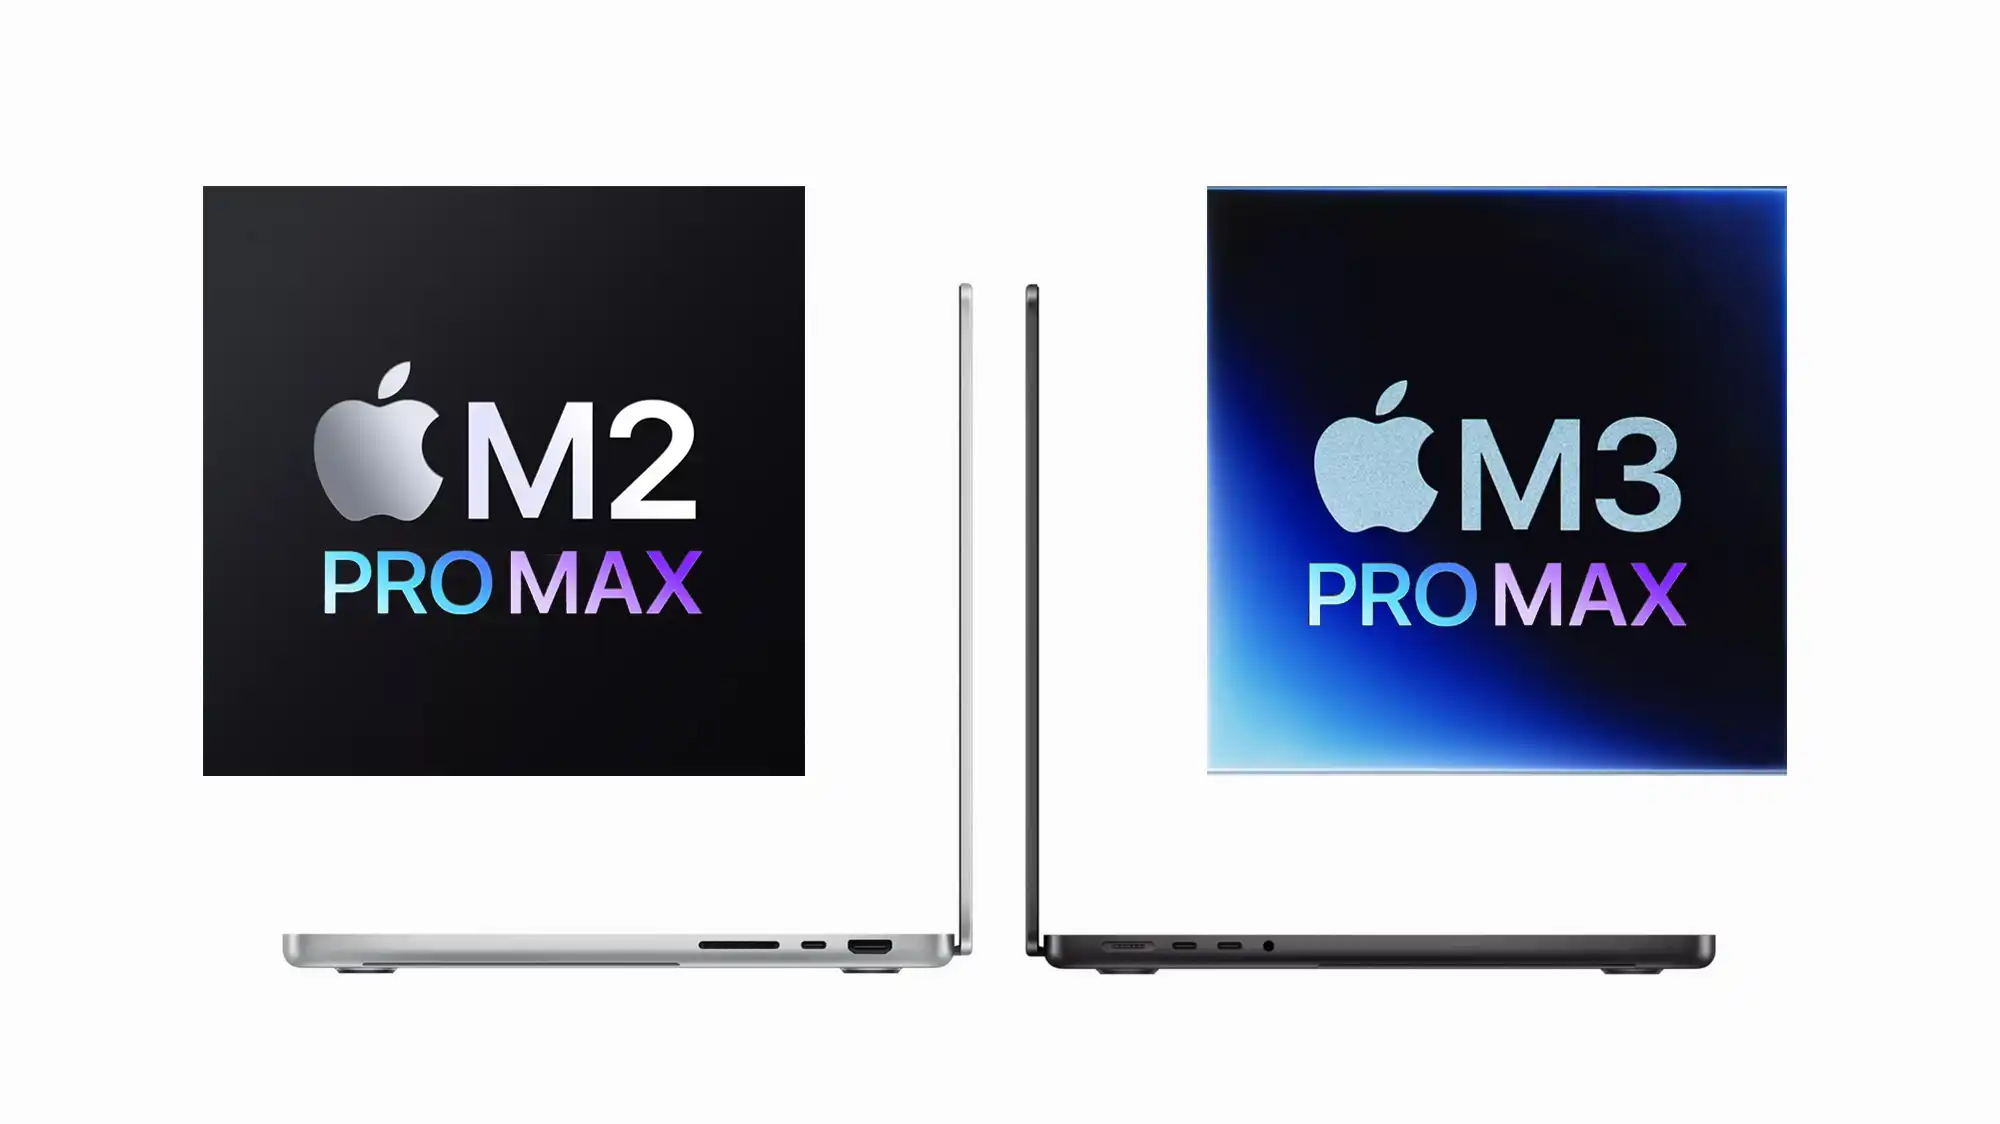 14-inch M3 MacBook Pro comparison with the 13-inch M2 MacBook Pro